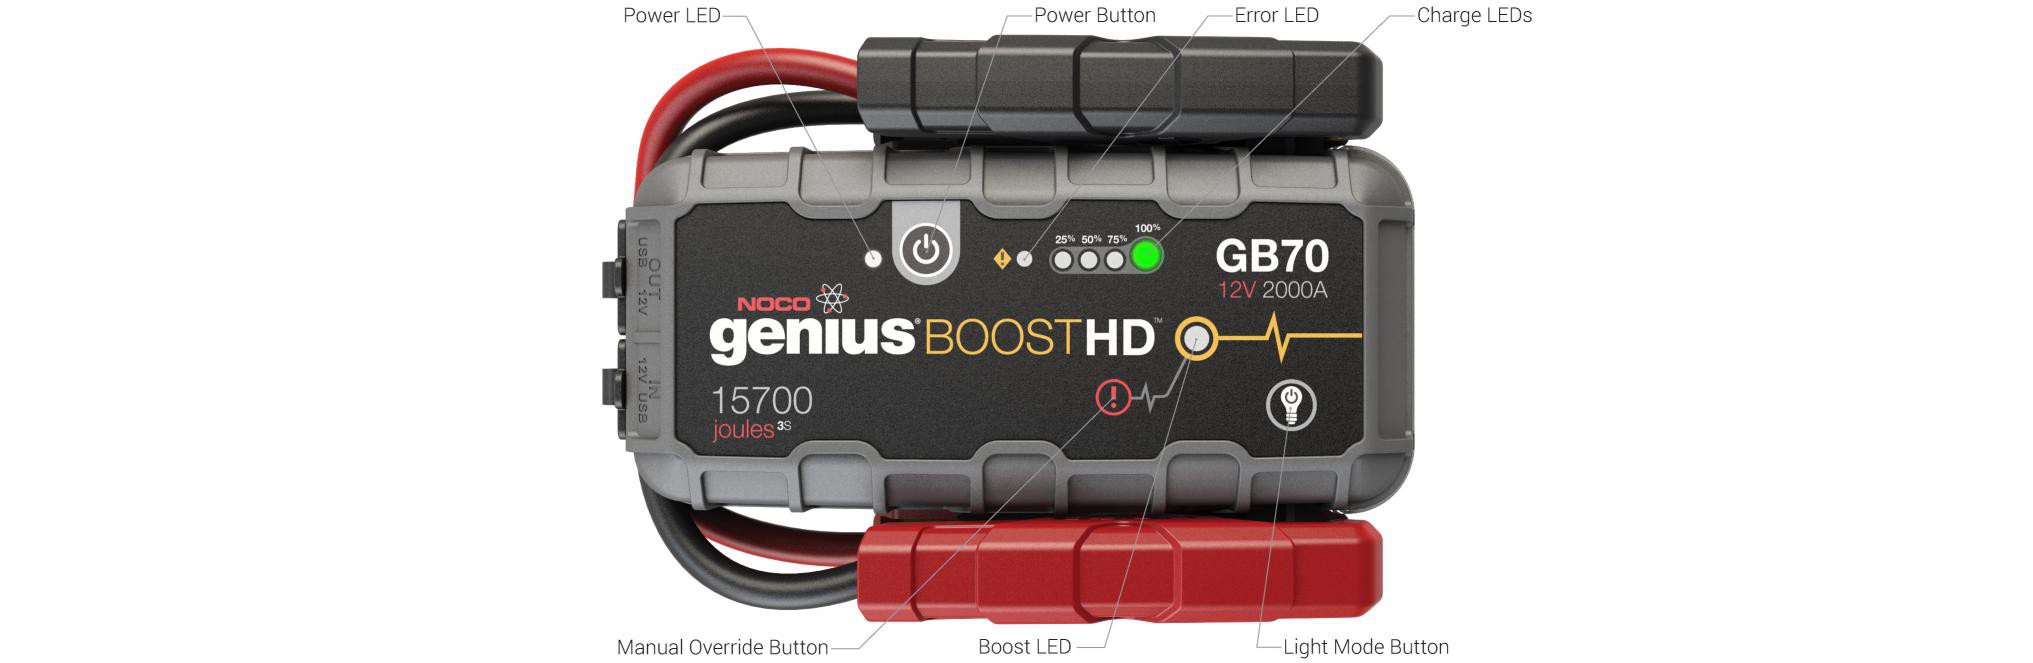 Booster de Batterie Moto NOCO GENIUS GB70 12v - 2000A